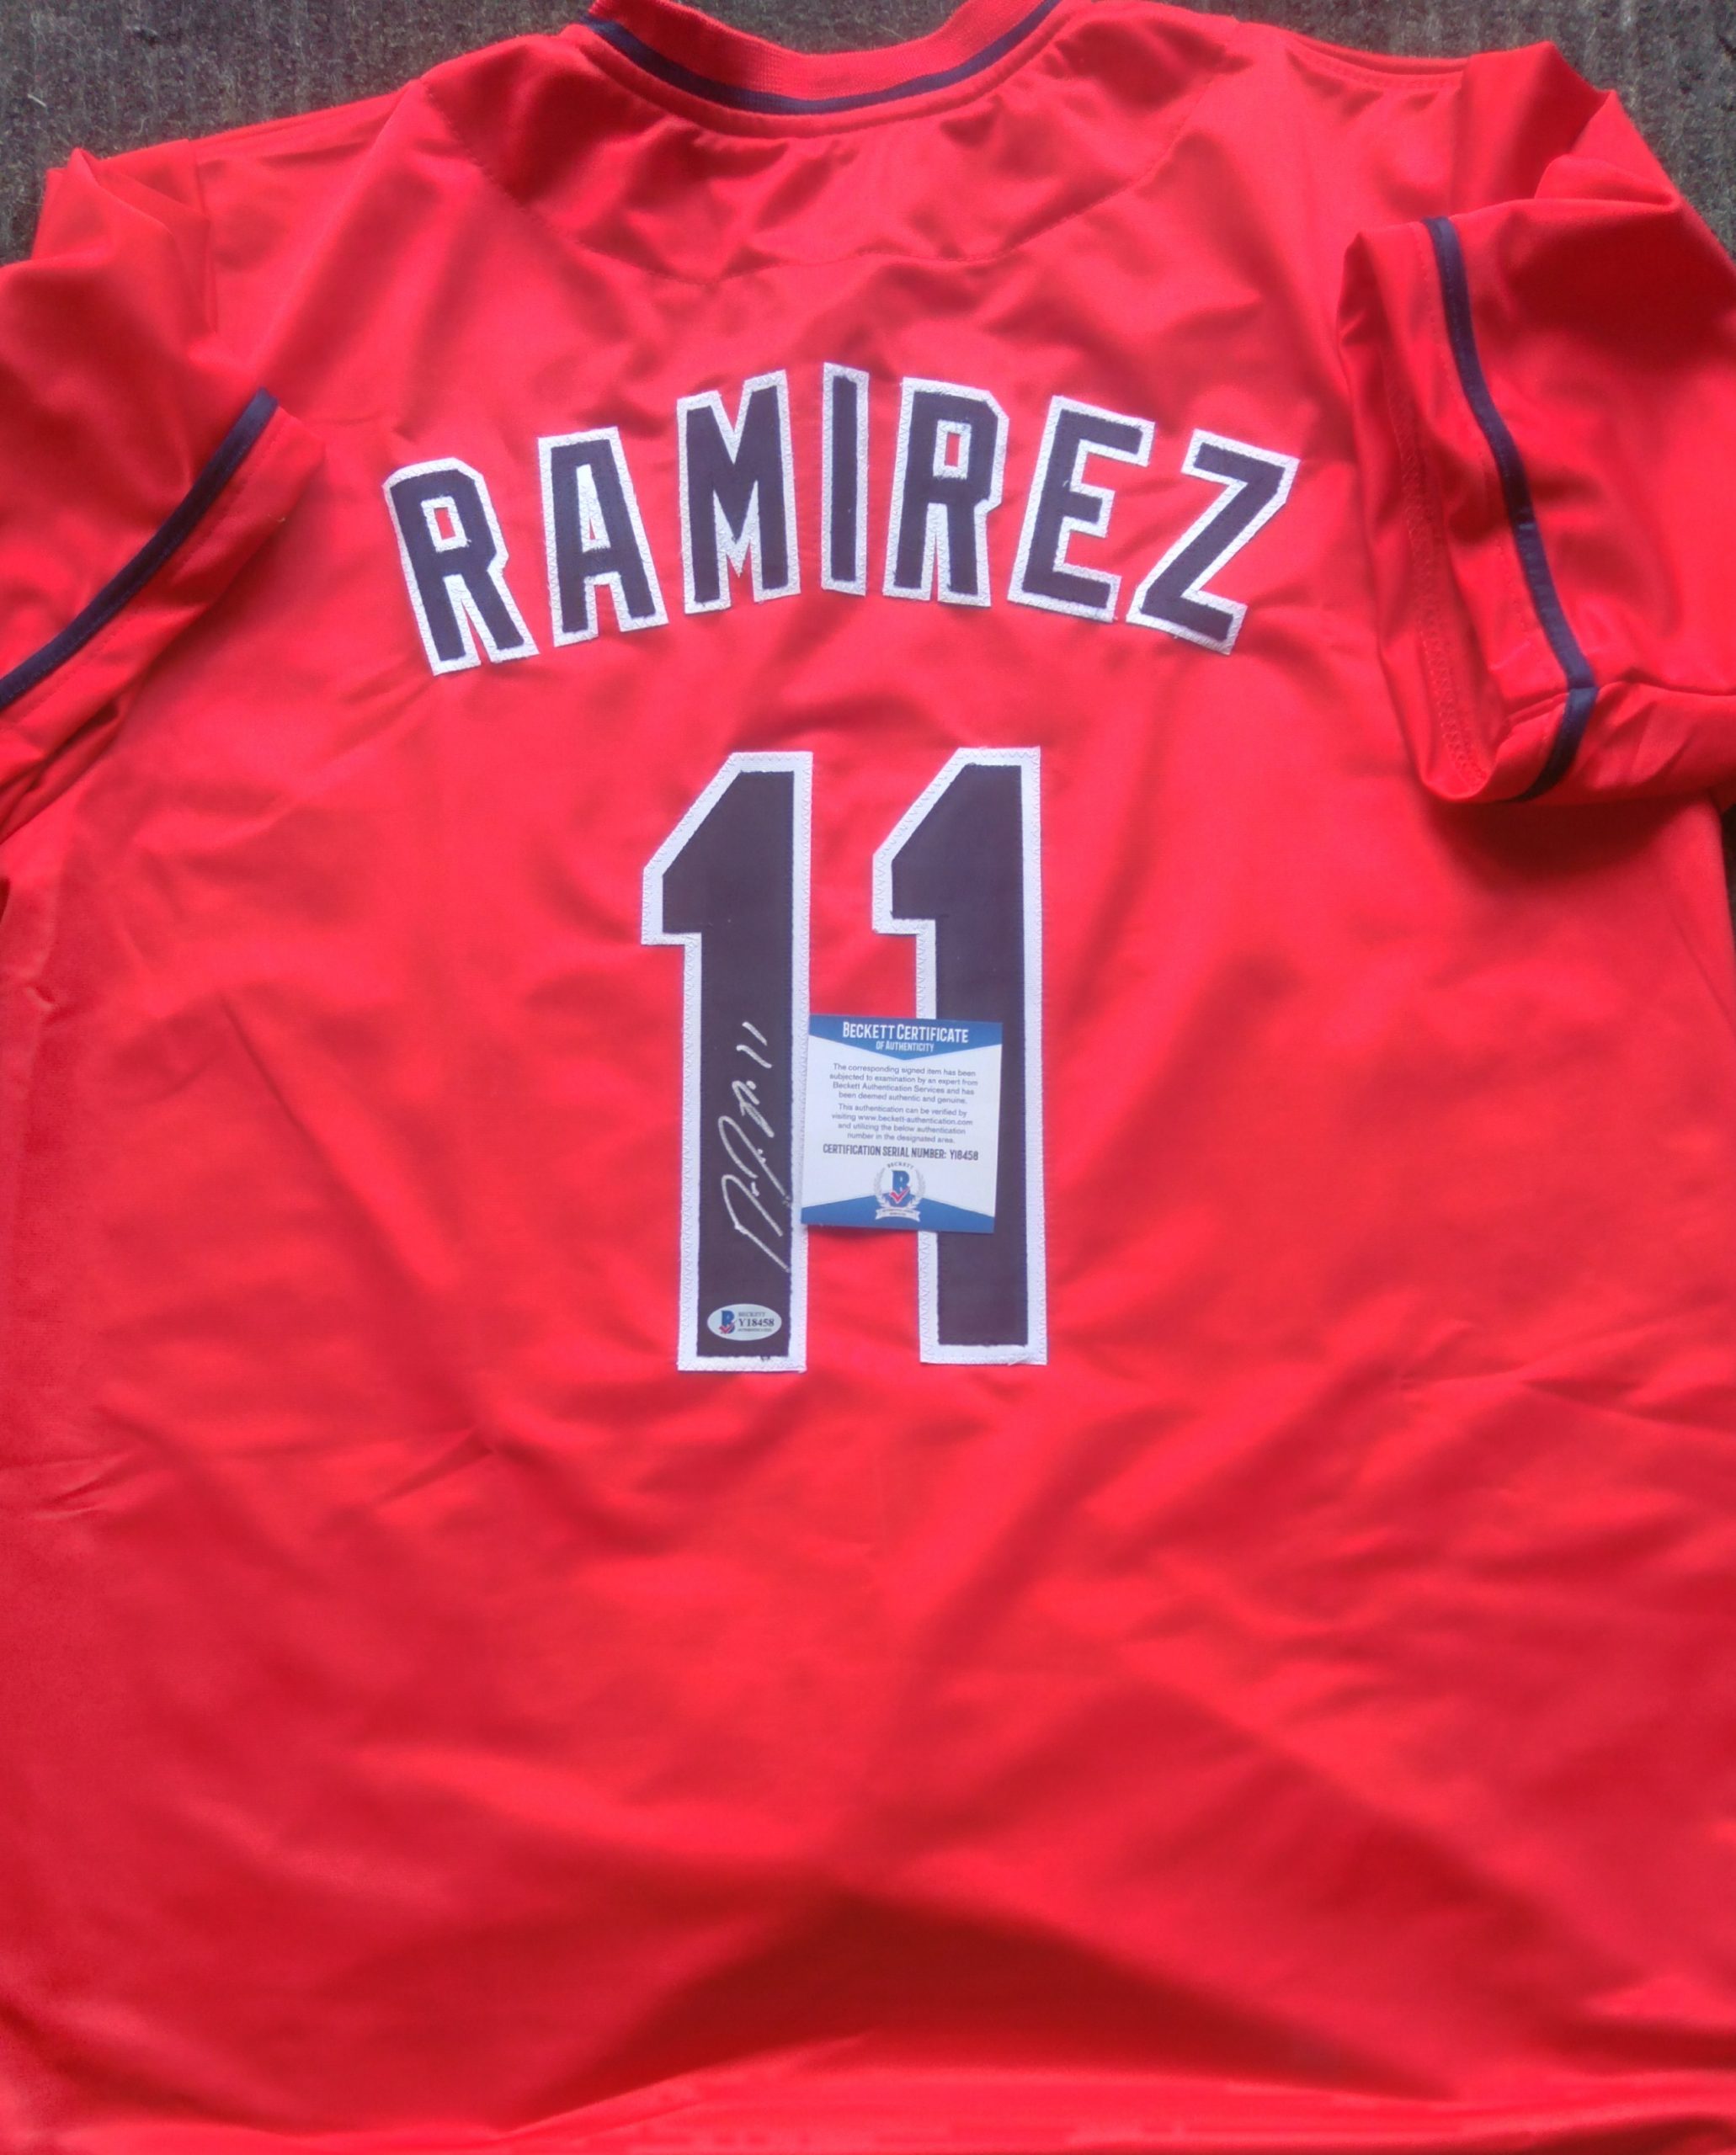 Jose Ramirez Signed Red Jersey Beckett